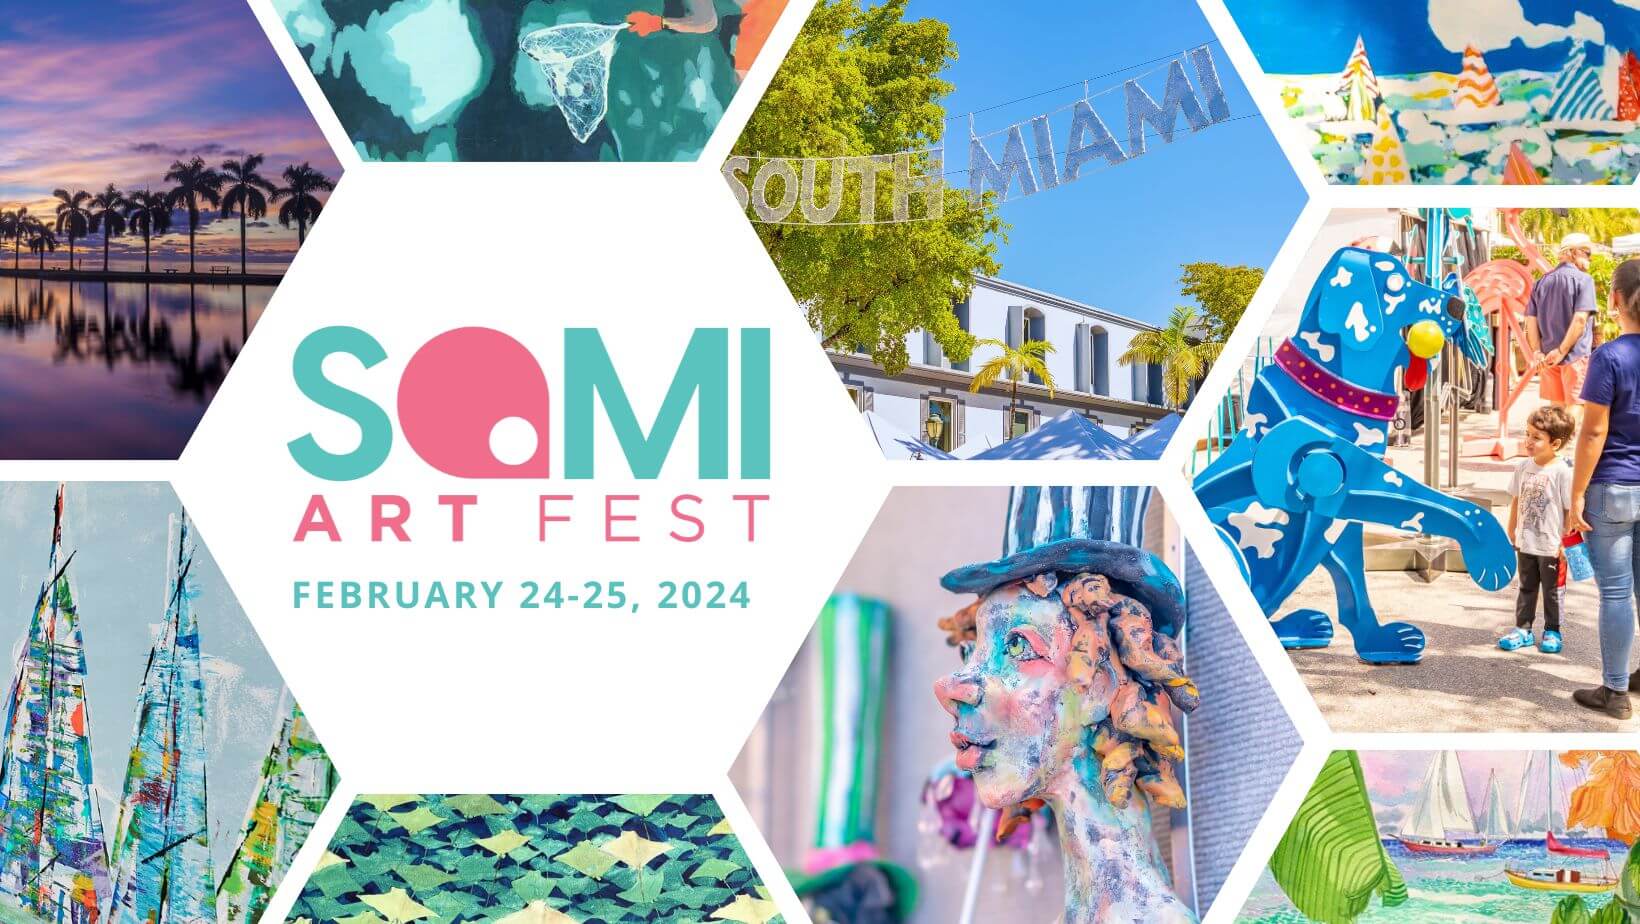 Somi Art Fest promotional flyer